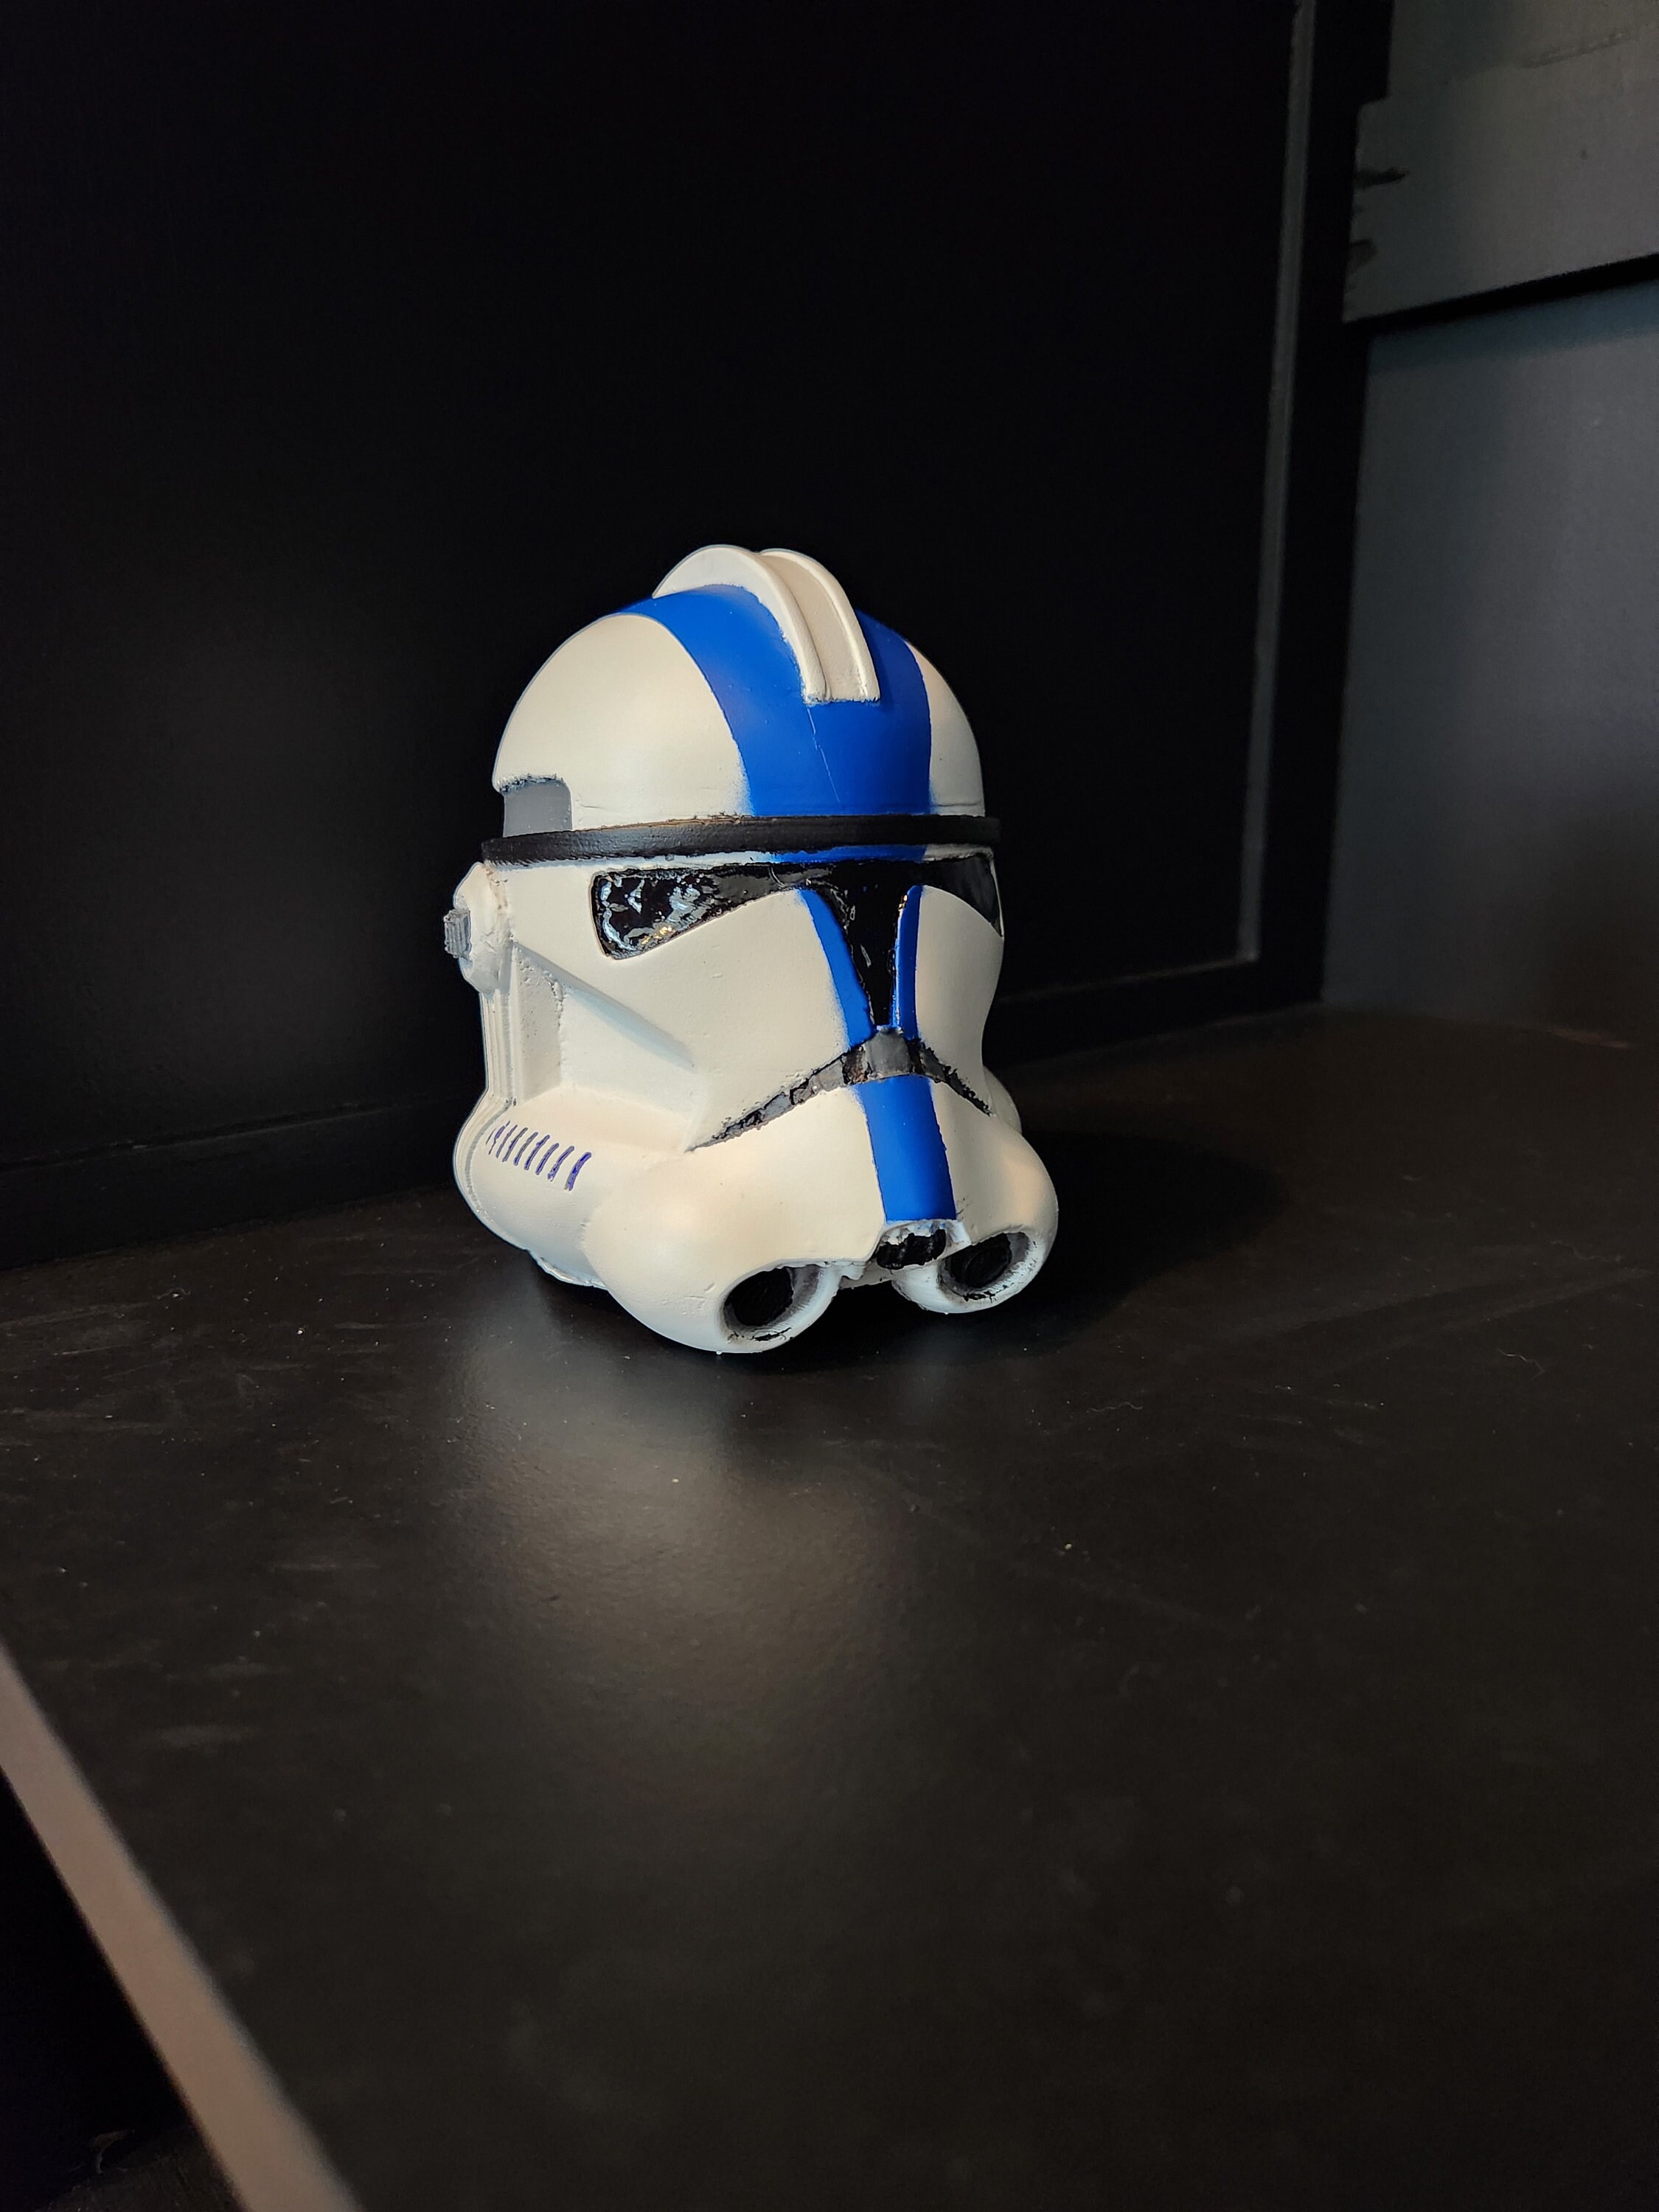 Star Wars Clone Troopers Miniature Christmas Ornaments